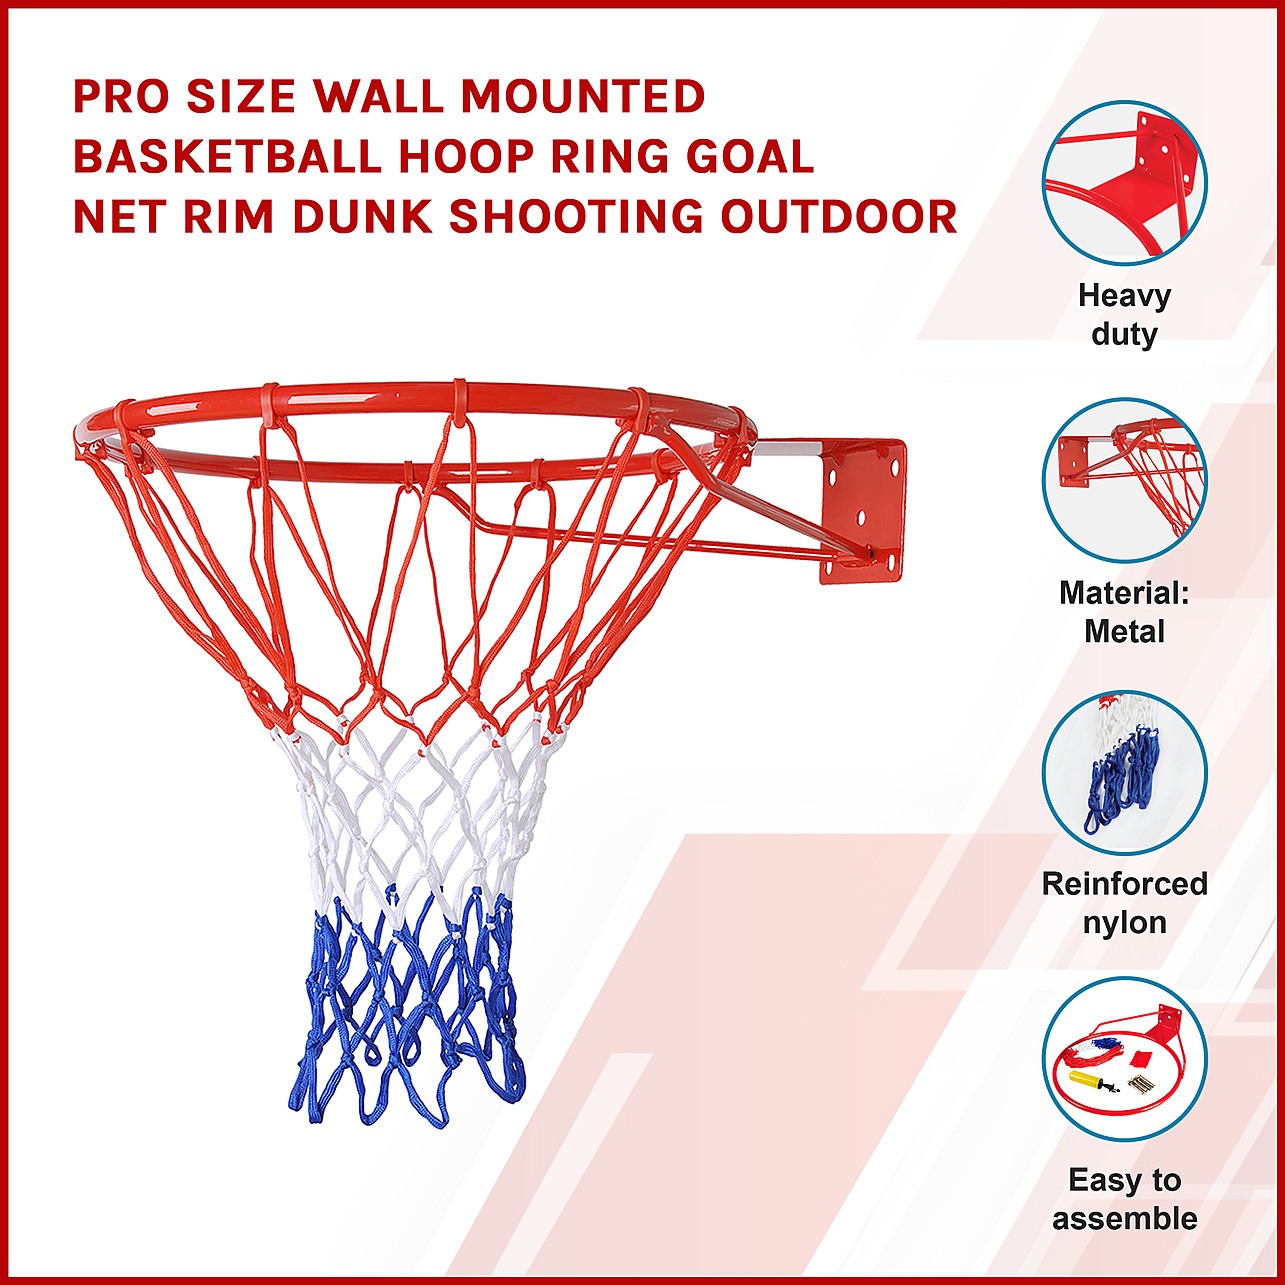 Basketball court size standard| Basketball court dimensions NBA | Basketball  court size in feet - YouTube